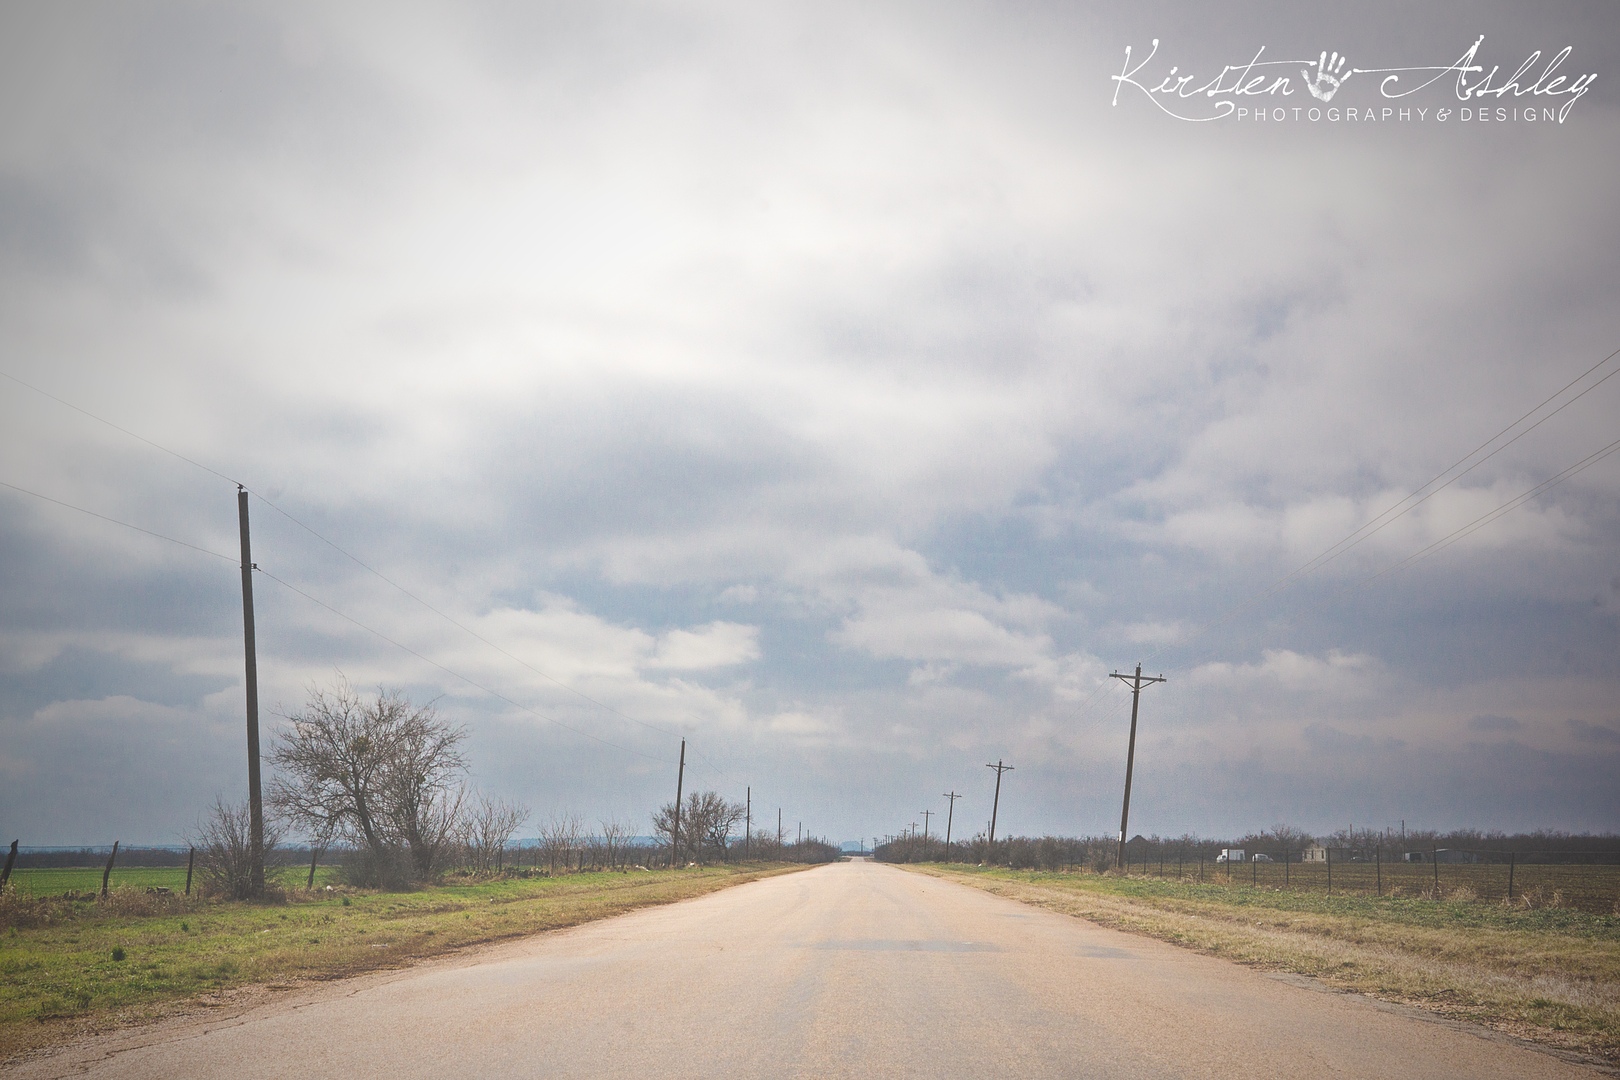 Kirsten Ashley Photography & Design | Abilene, Texas | Home Sweet Home